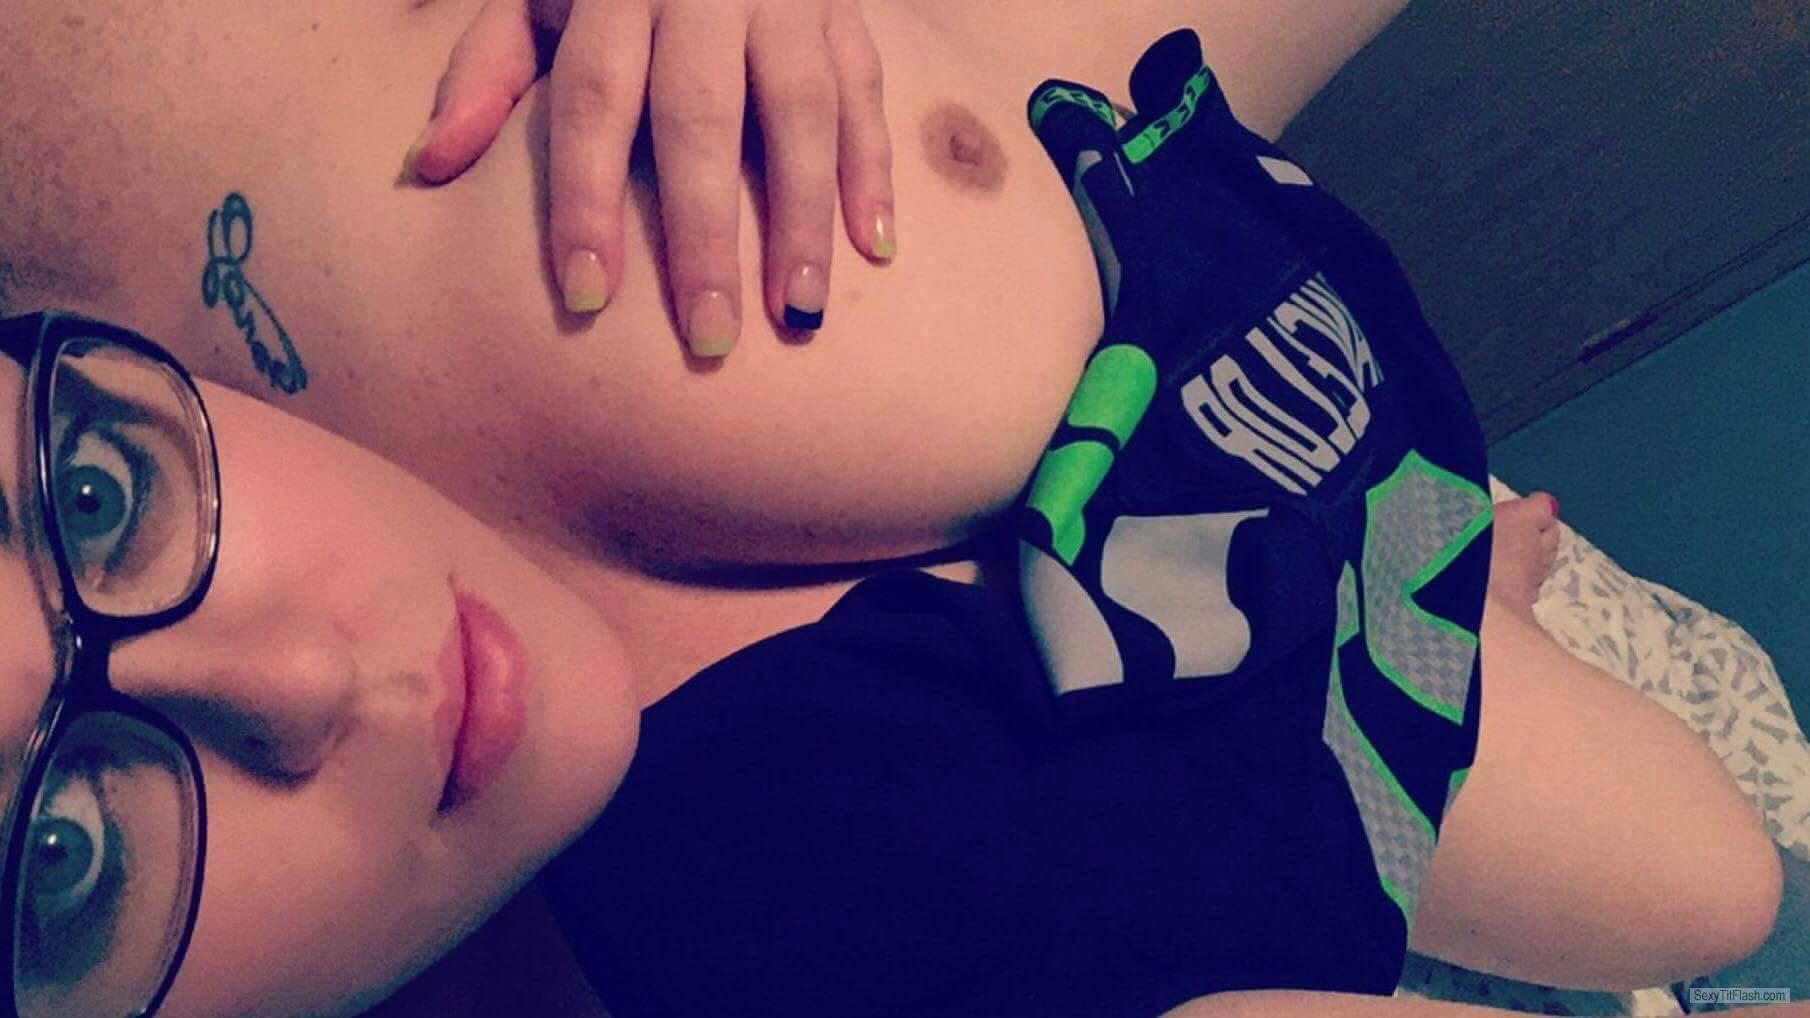 Tit Flash: My Very Big Tits - Topless Go Seahawks from United Kingdom